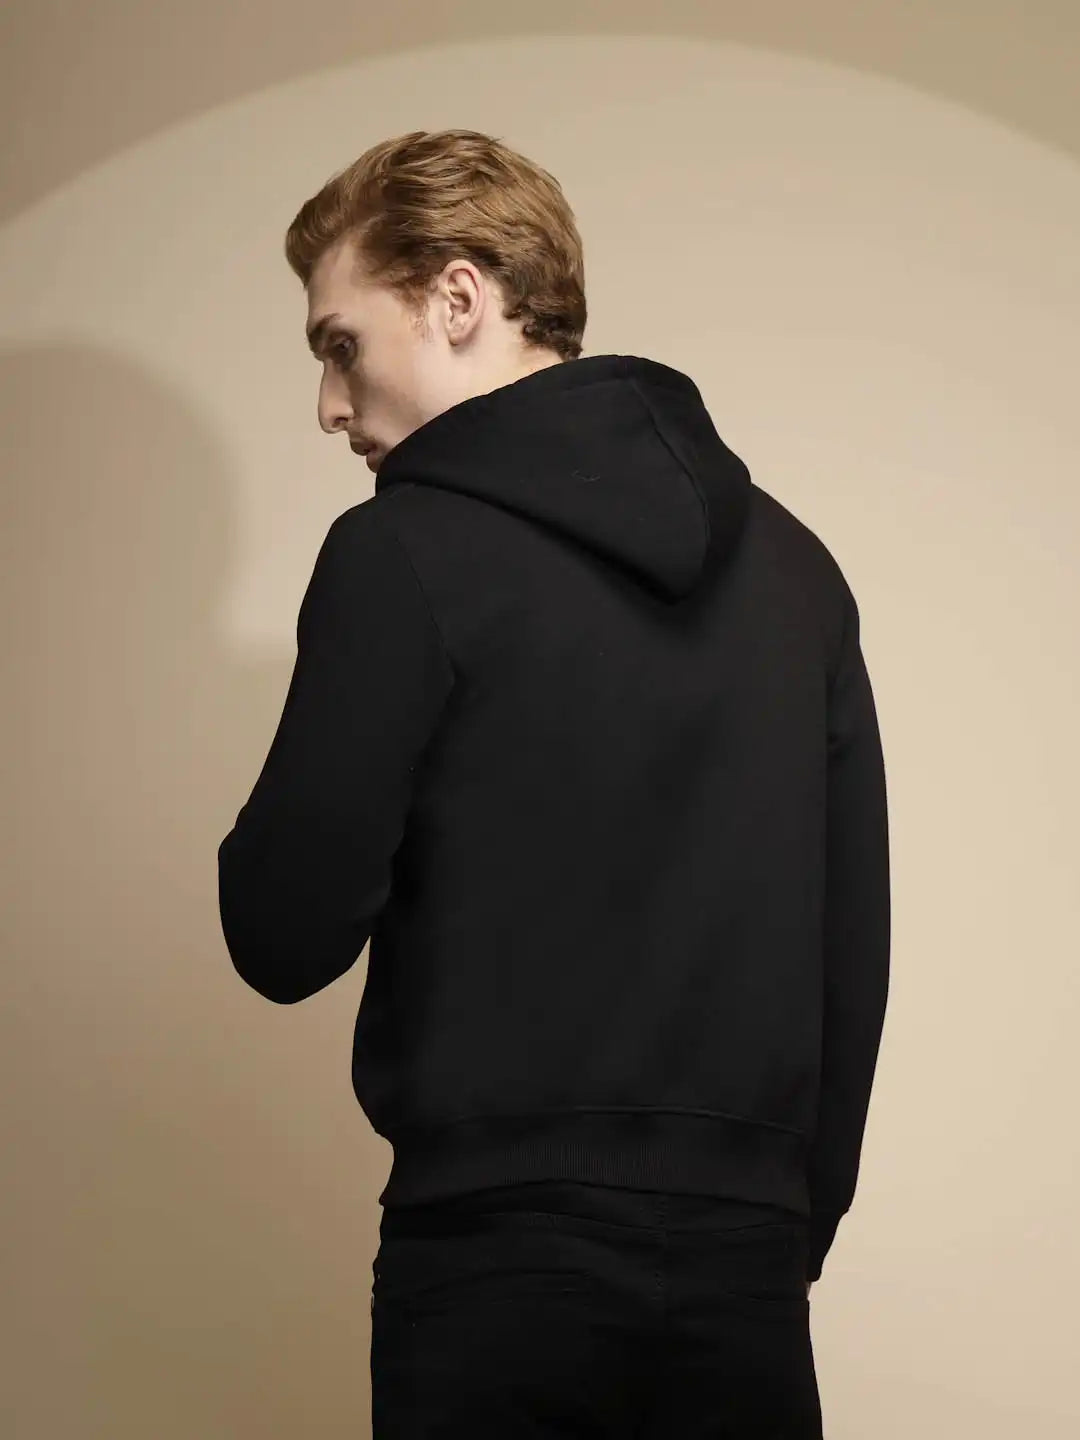 Black Solid Full Sleeve Stylish Hooded Sweatshirt